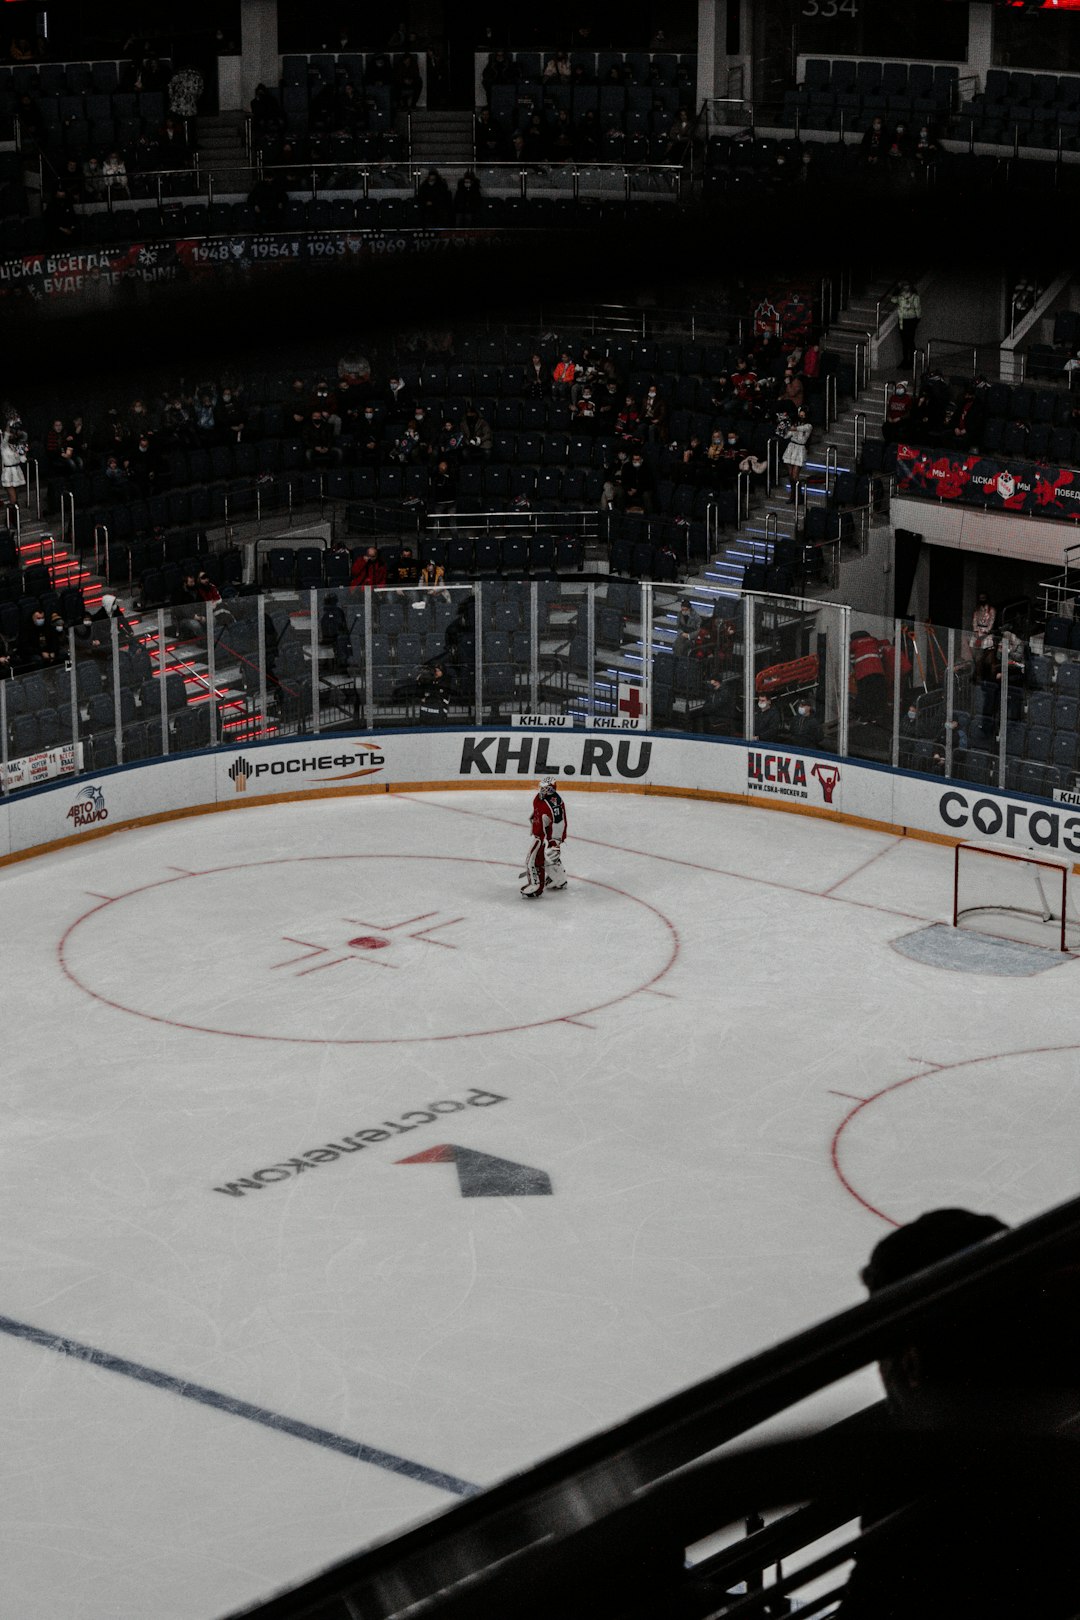 people playing ice hockey inside stadium